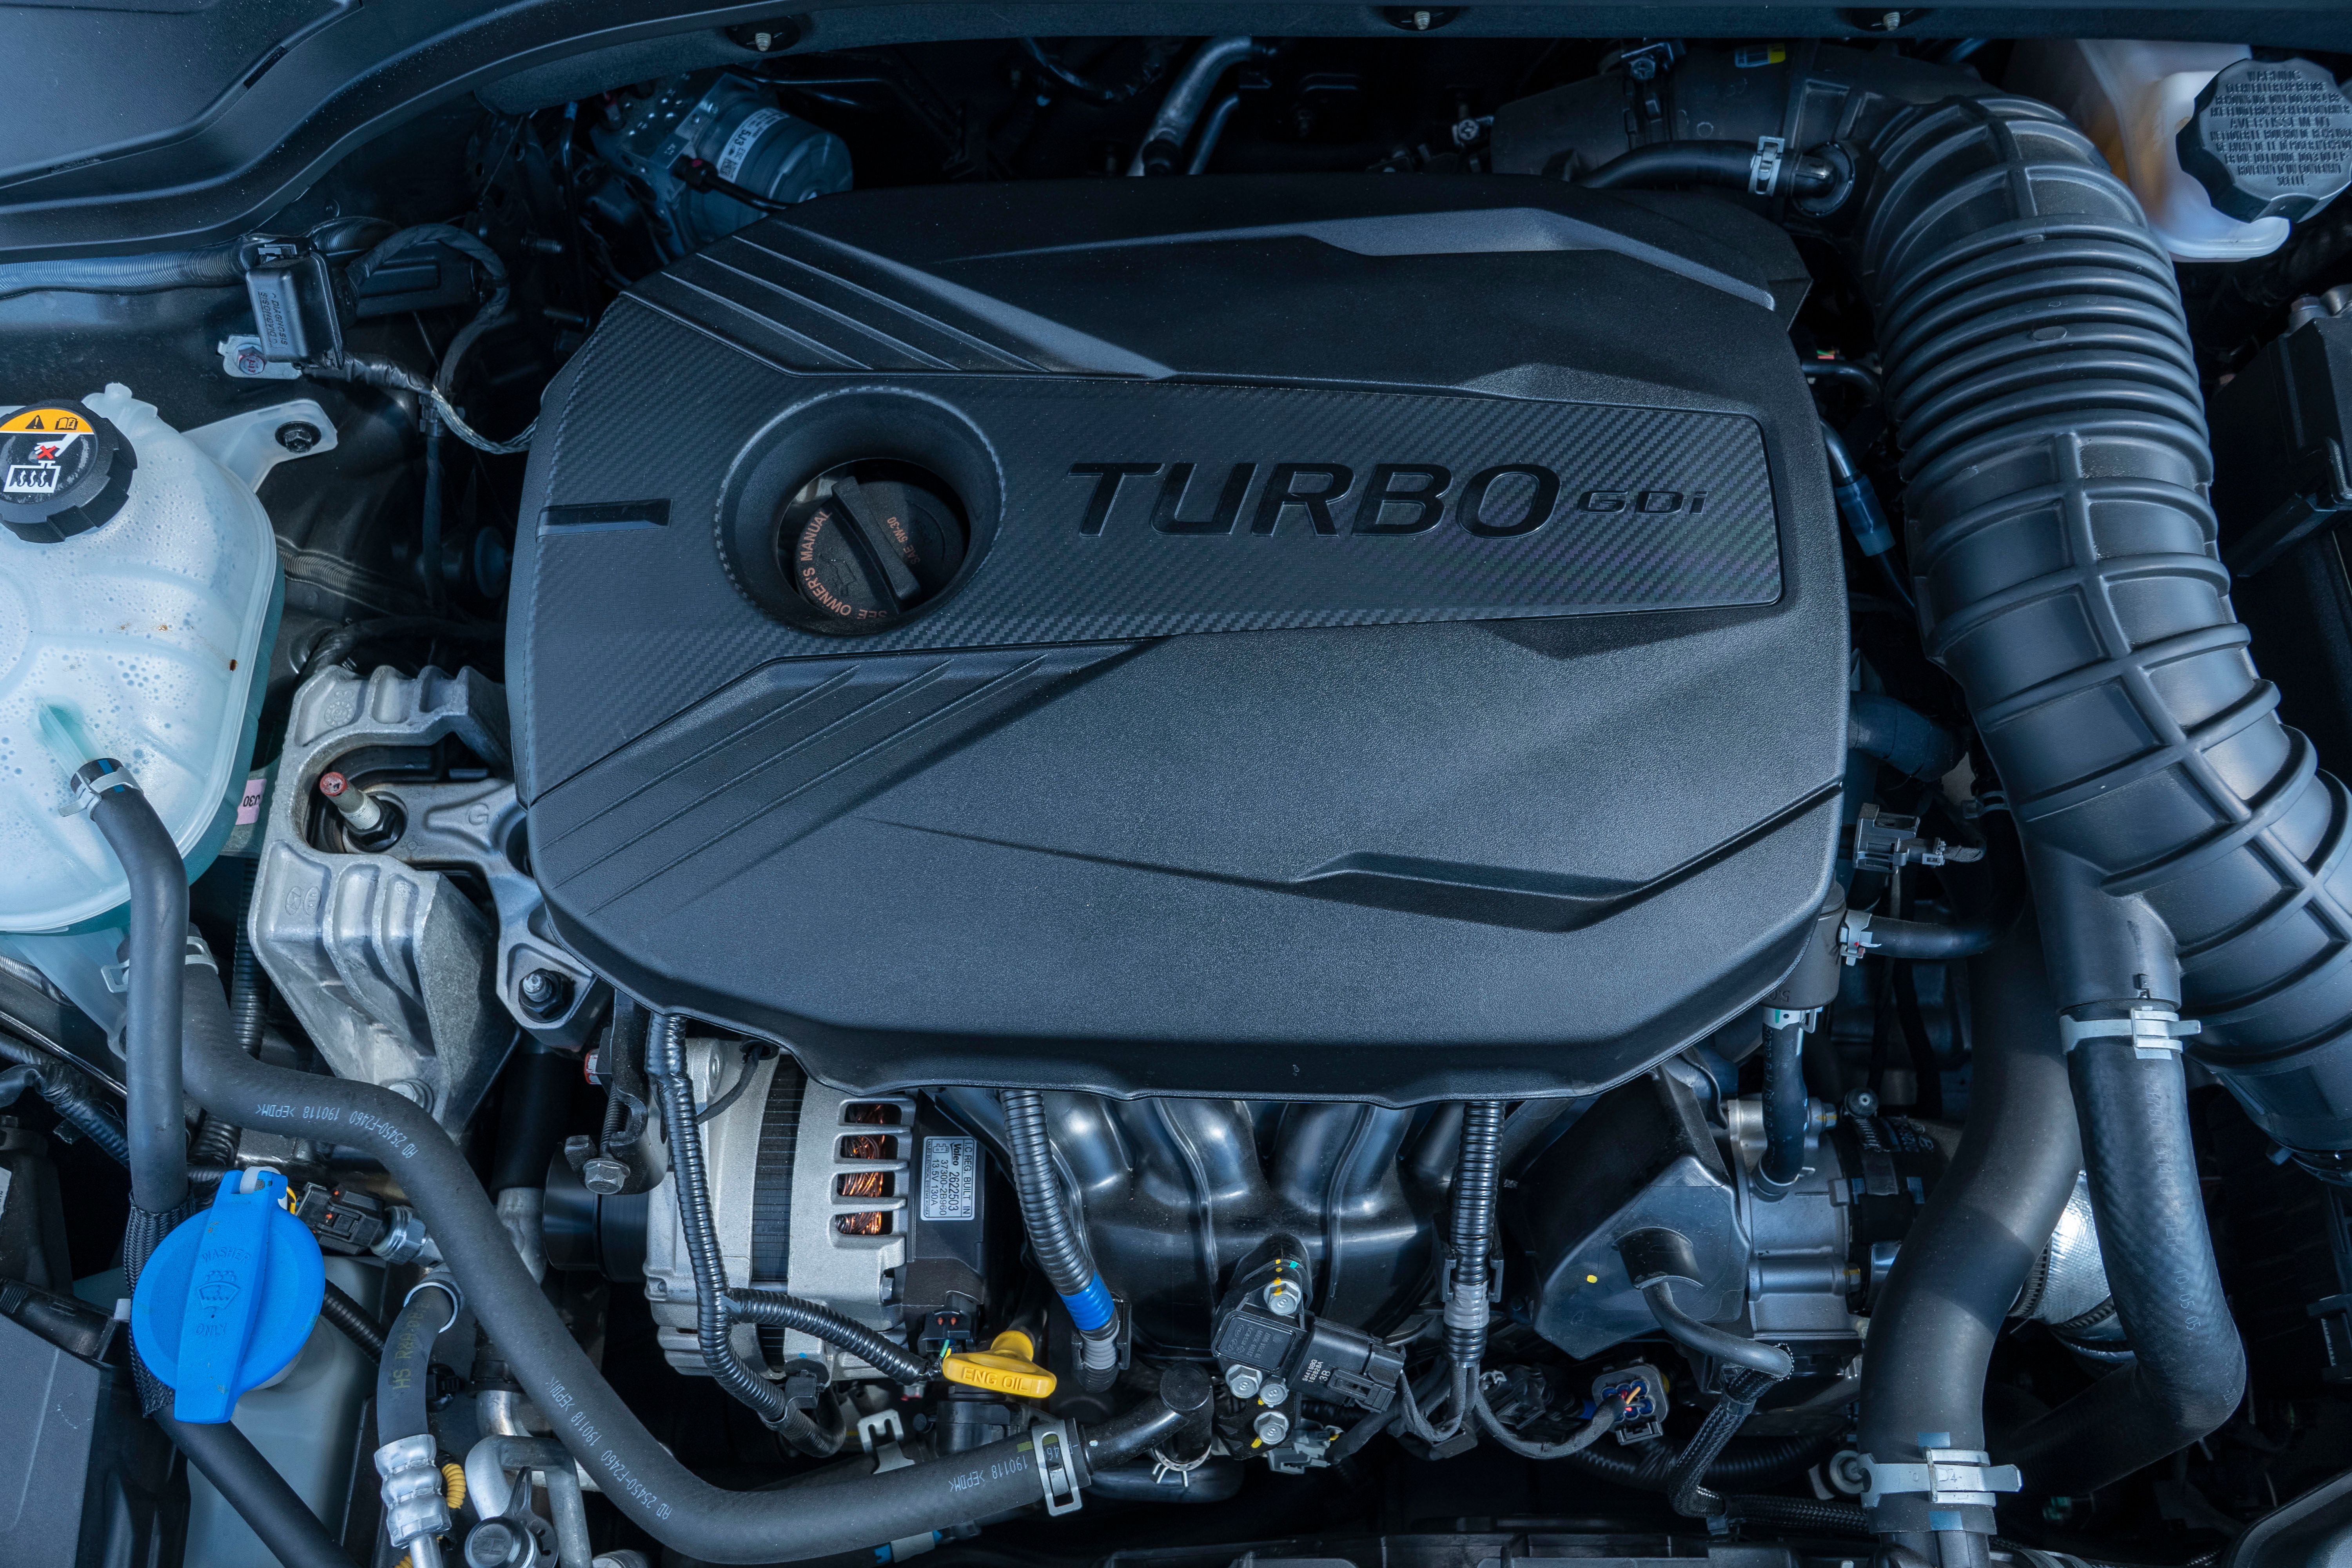 2020 Hyundai Veloster Turbo - Driven